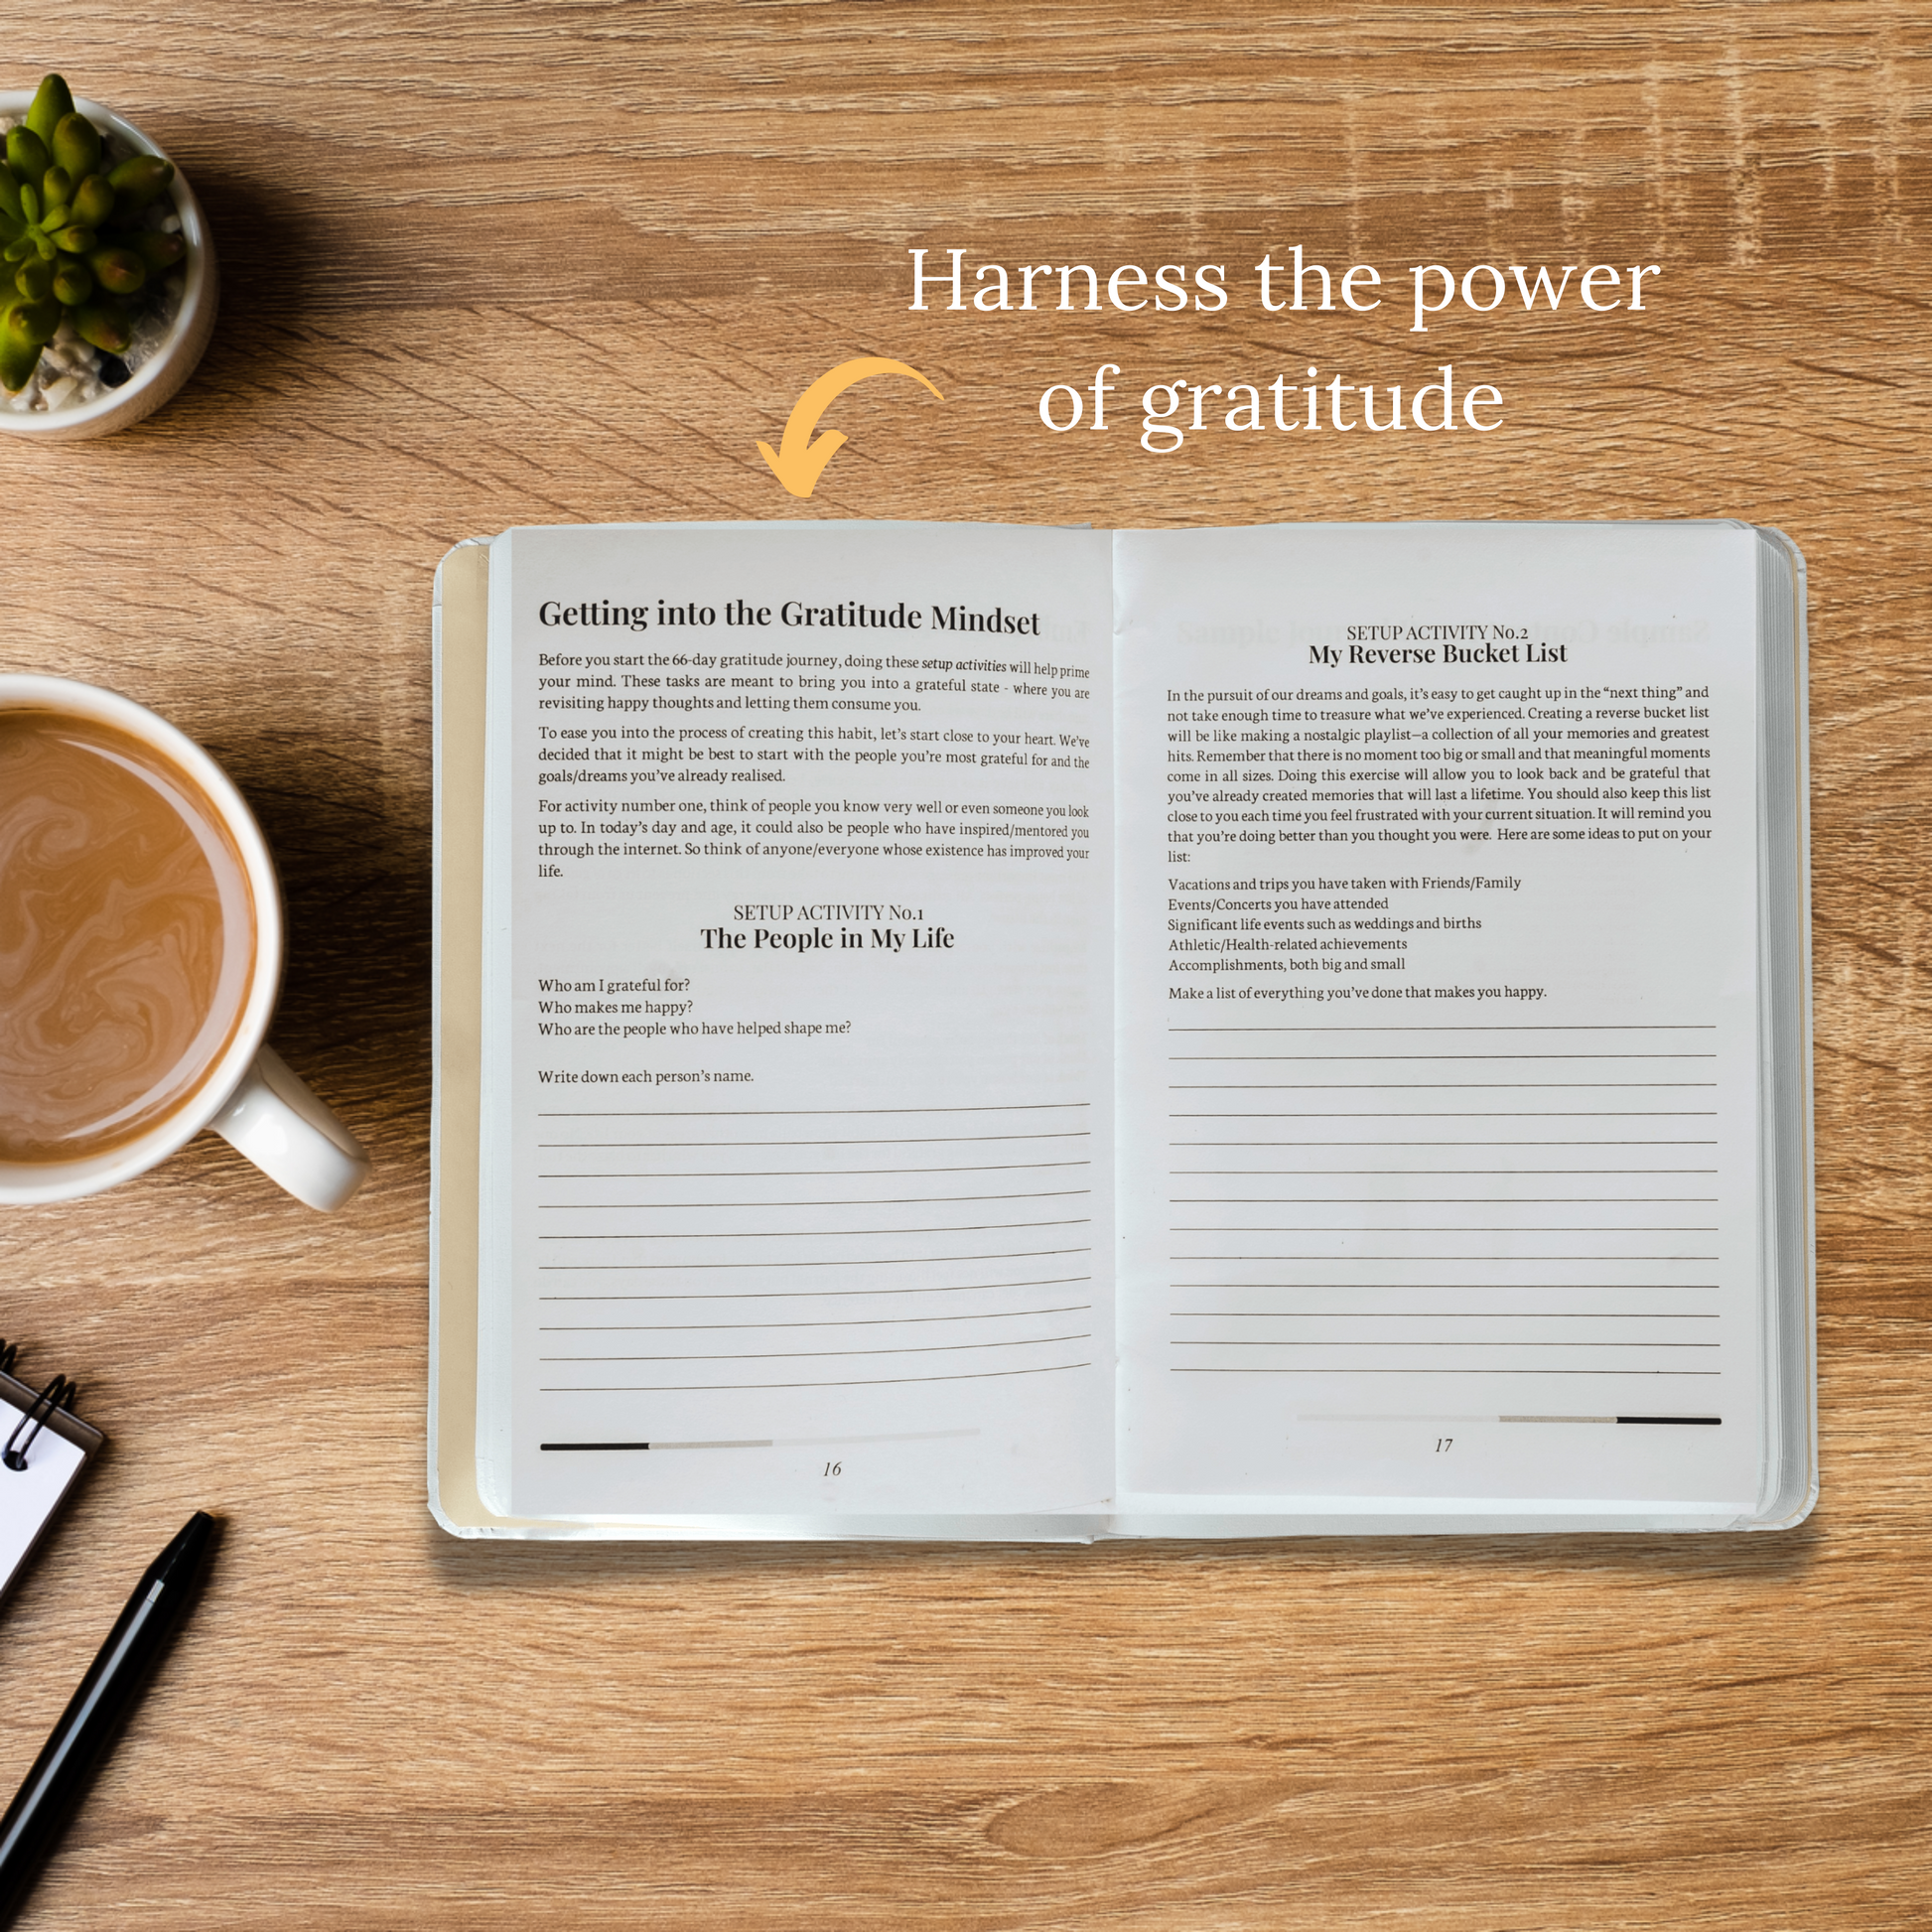 Harness the power of gratitude 